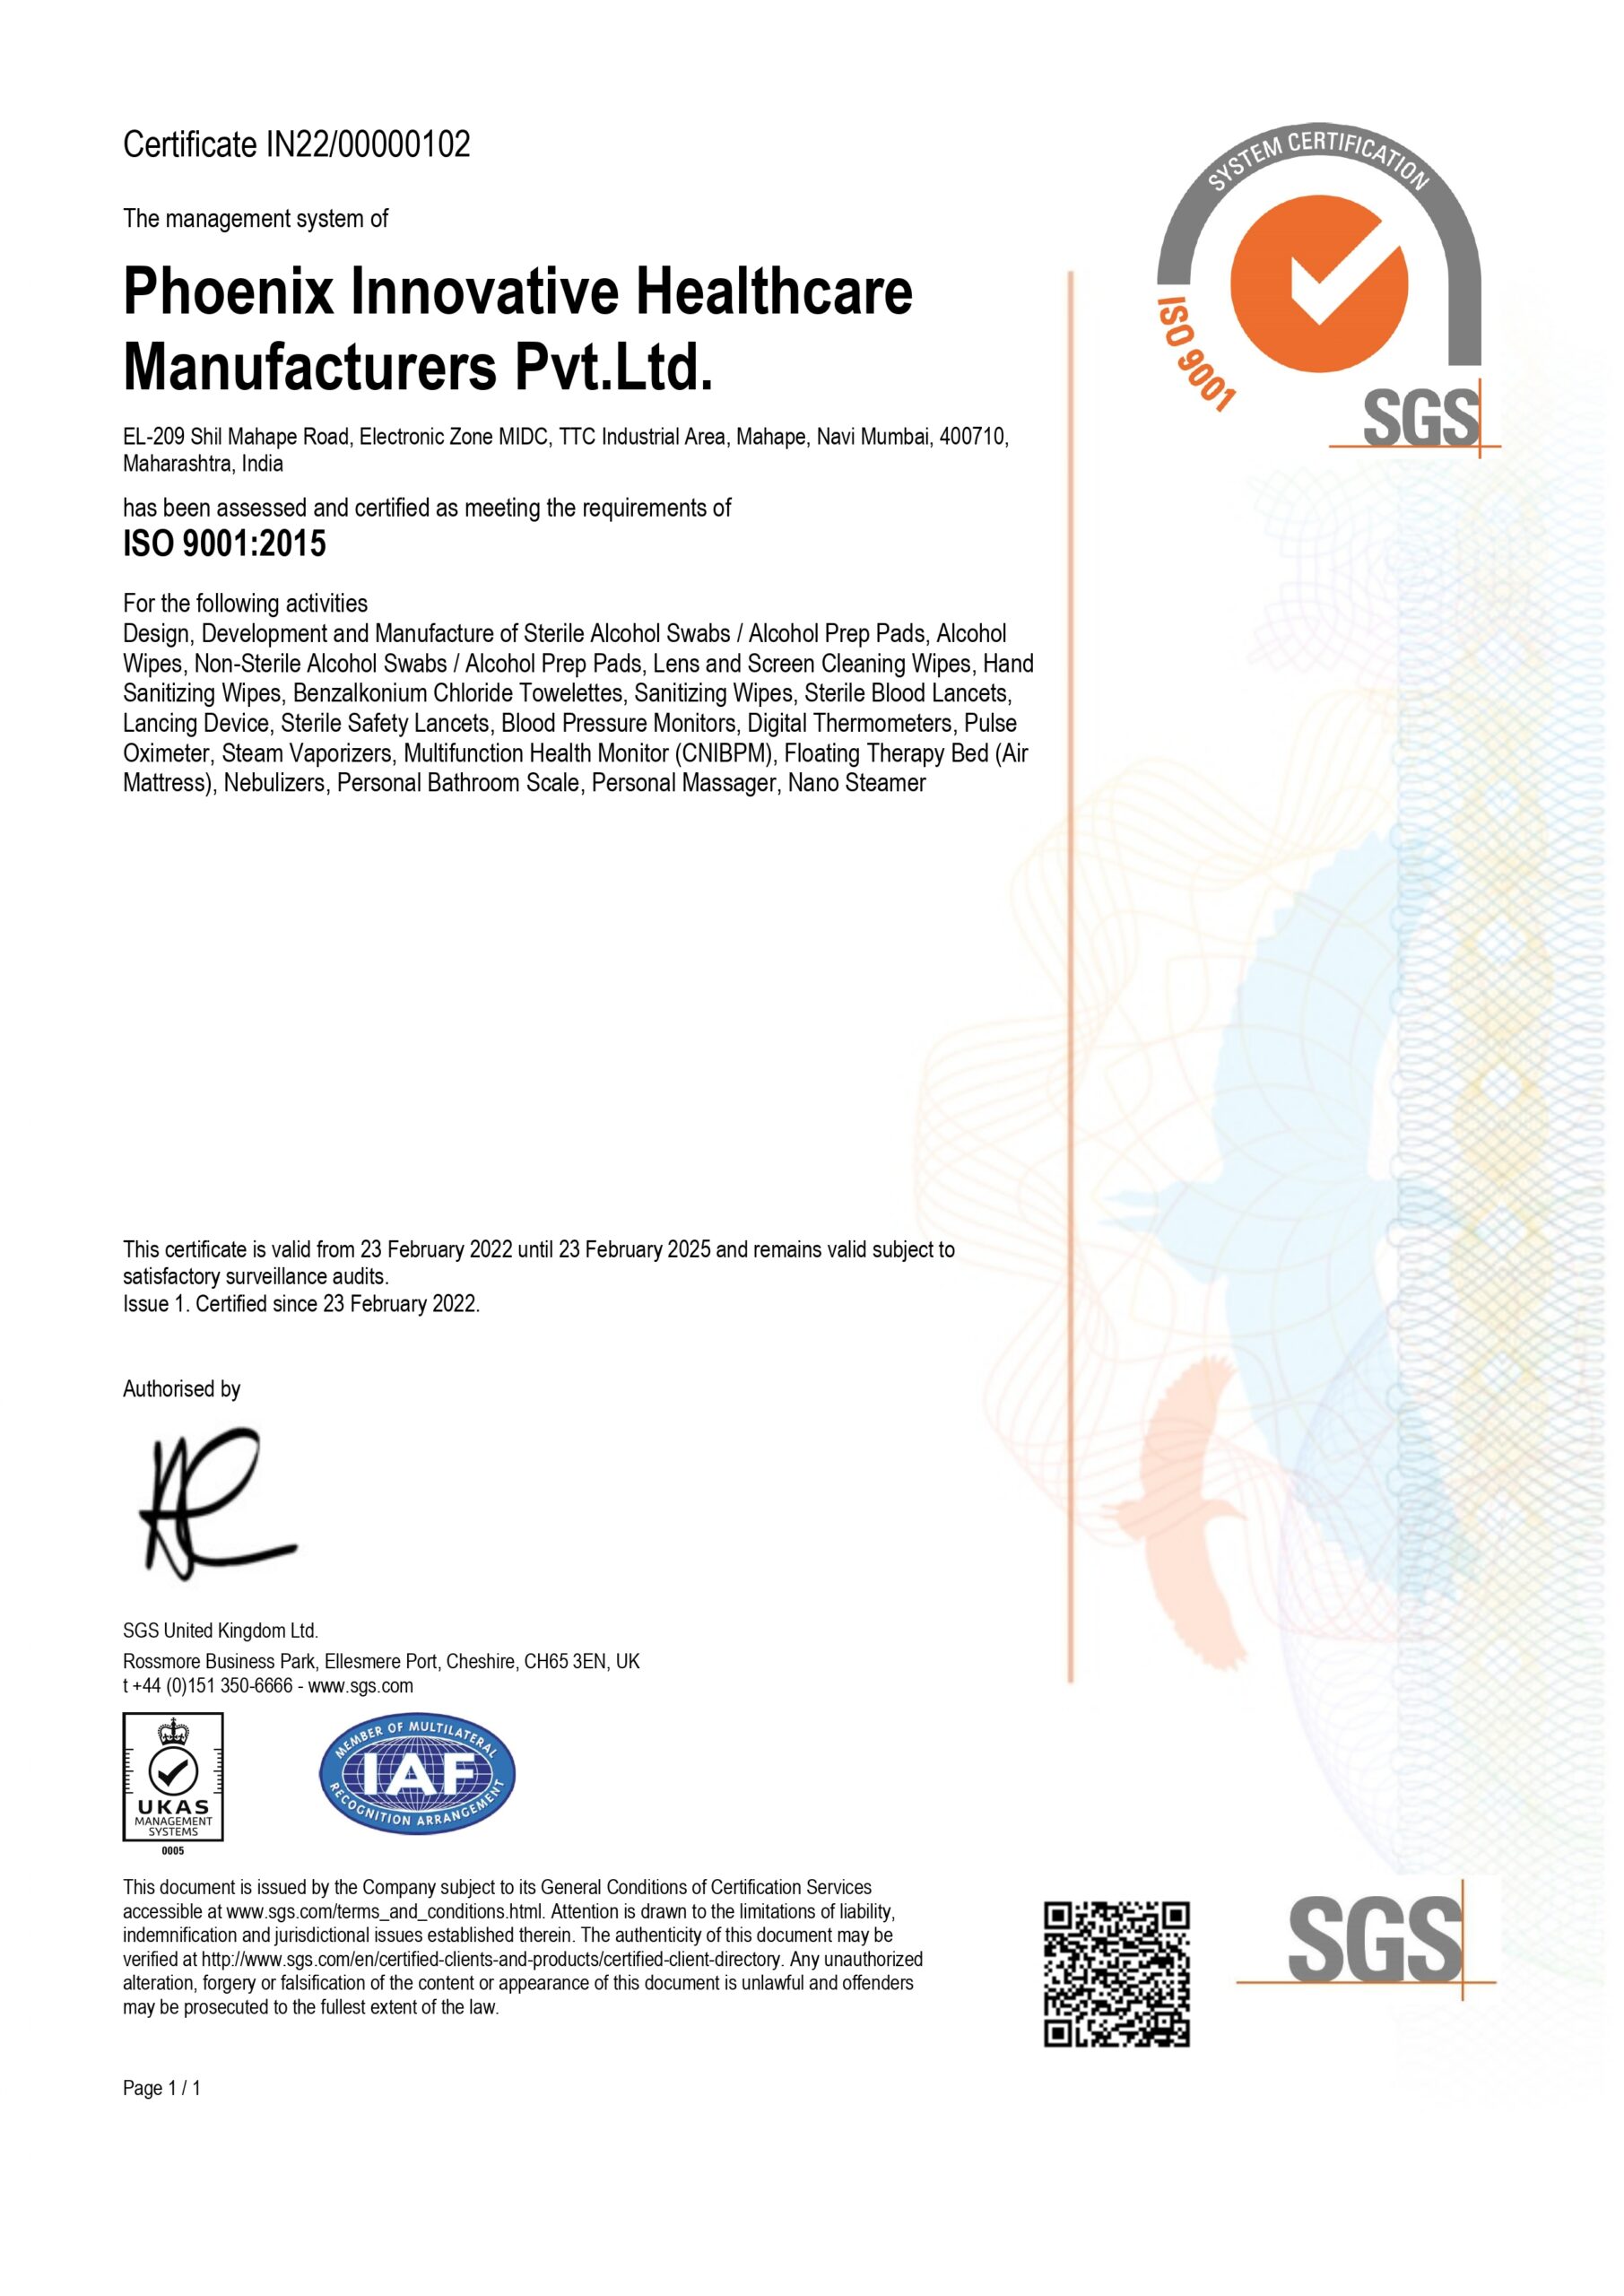 ISO 9001 Certificate Vali till Feb 2025